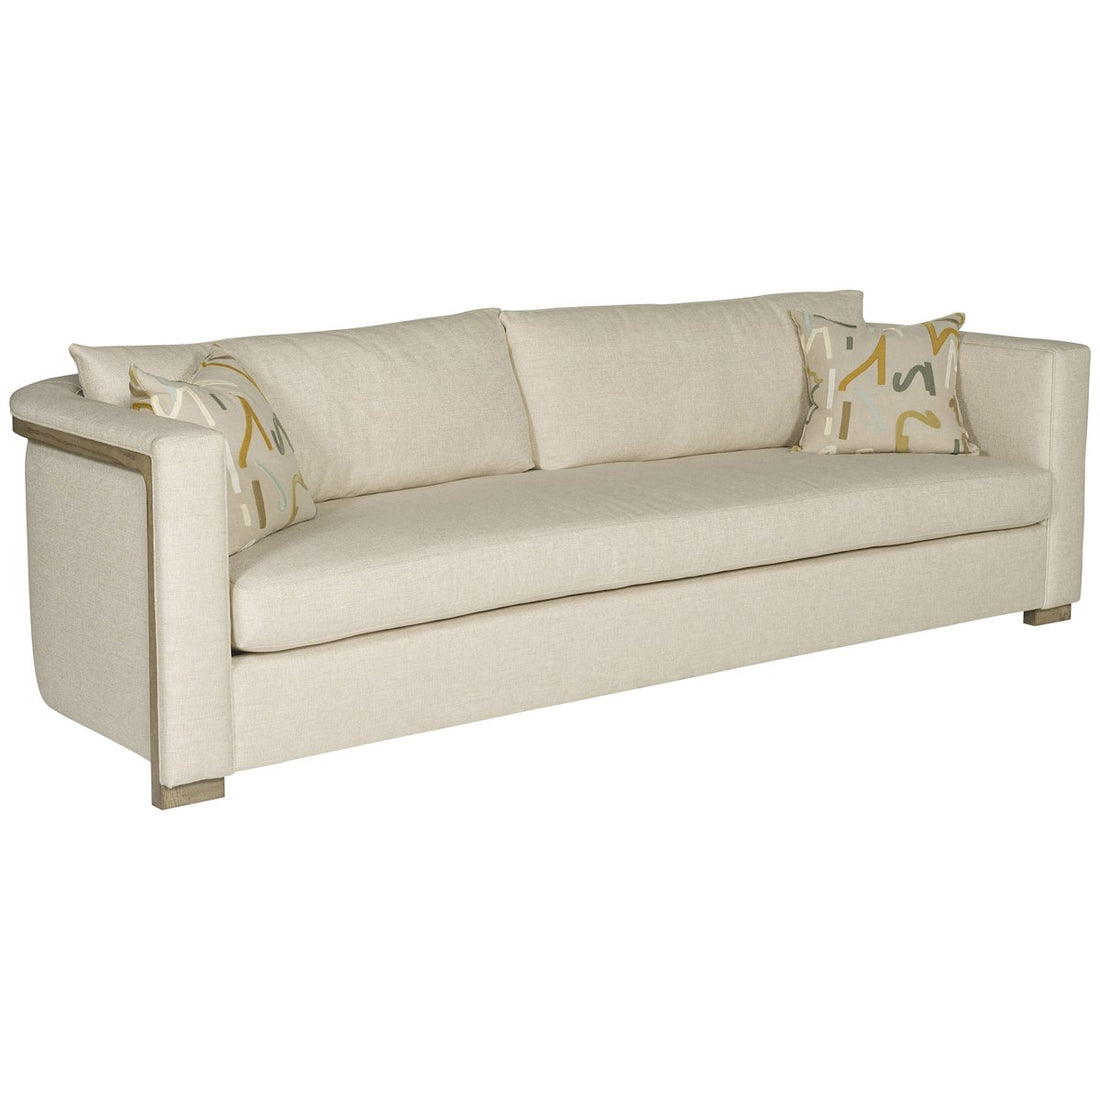 Vanguard Furniture Brandt Bench Seat Extended Sofa